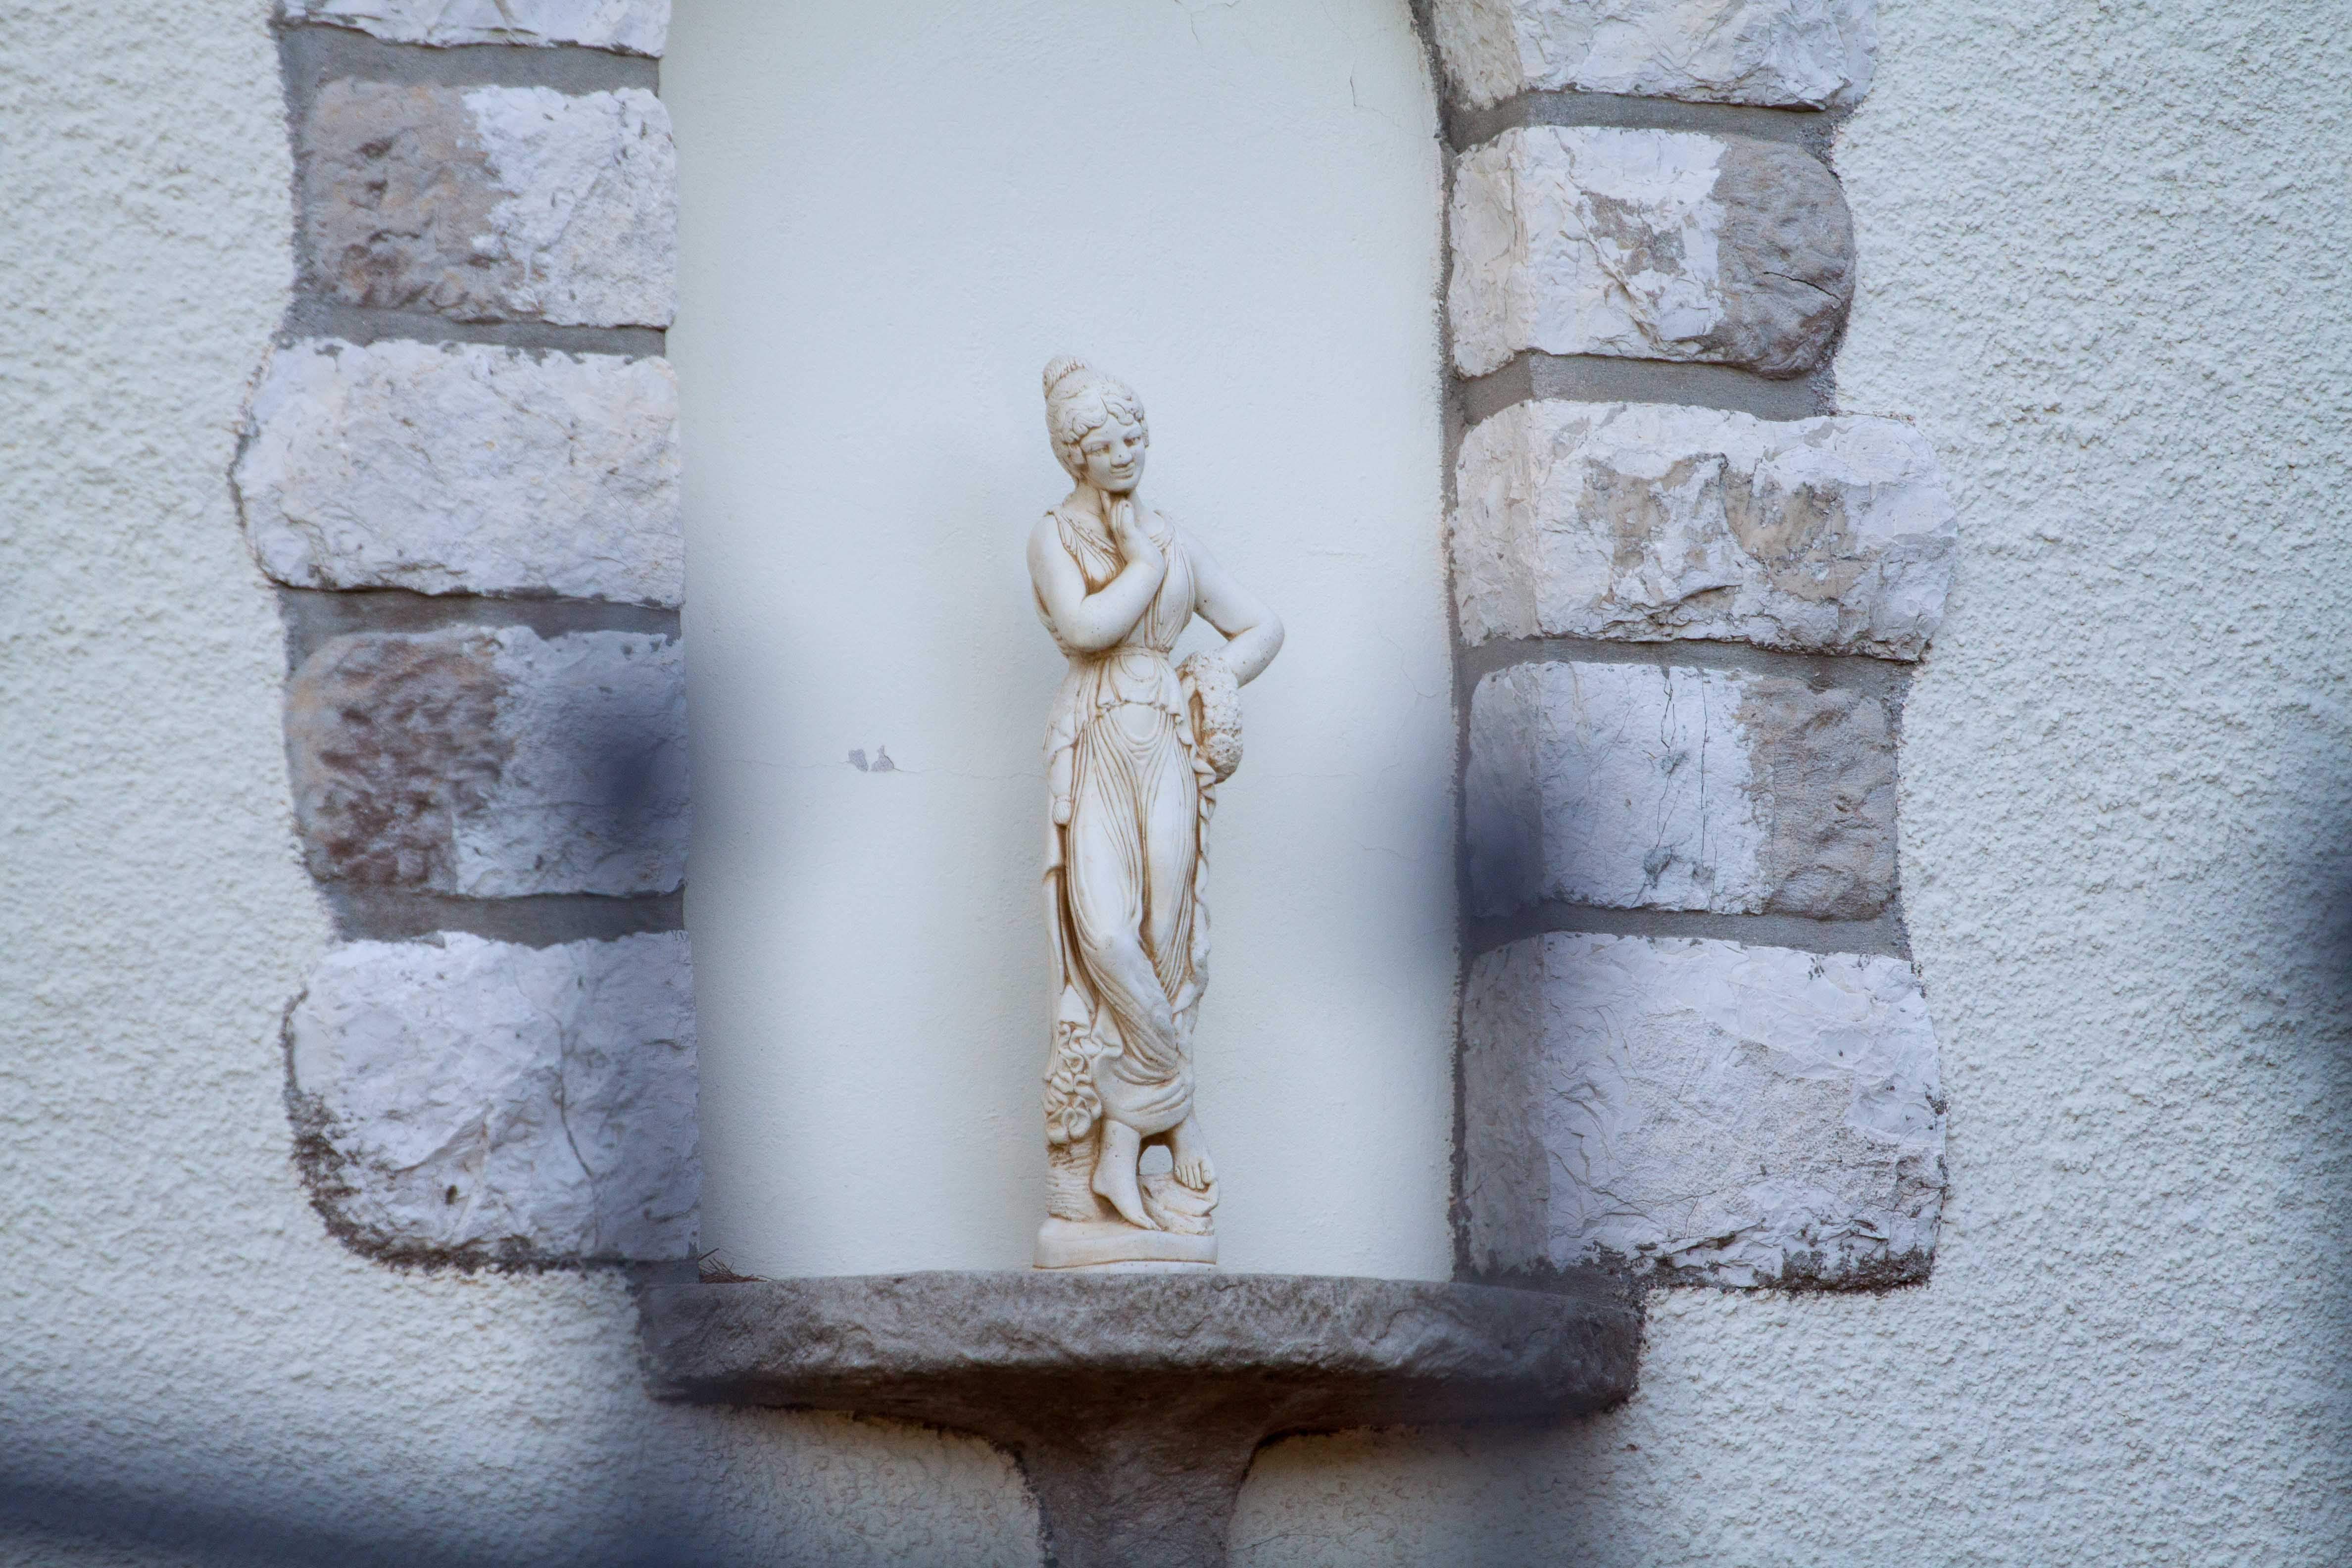 Cap d'Antibes statues